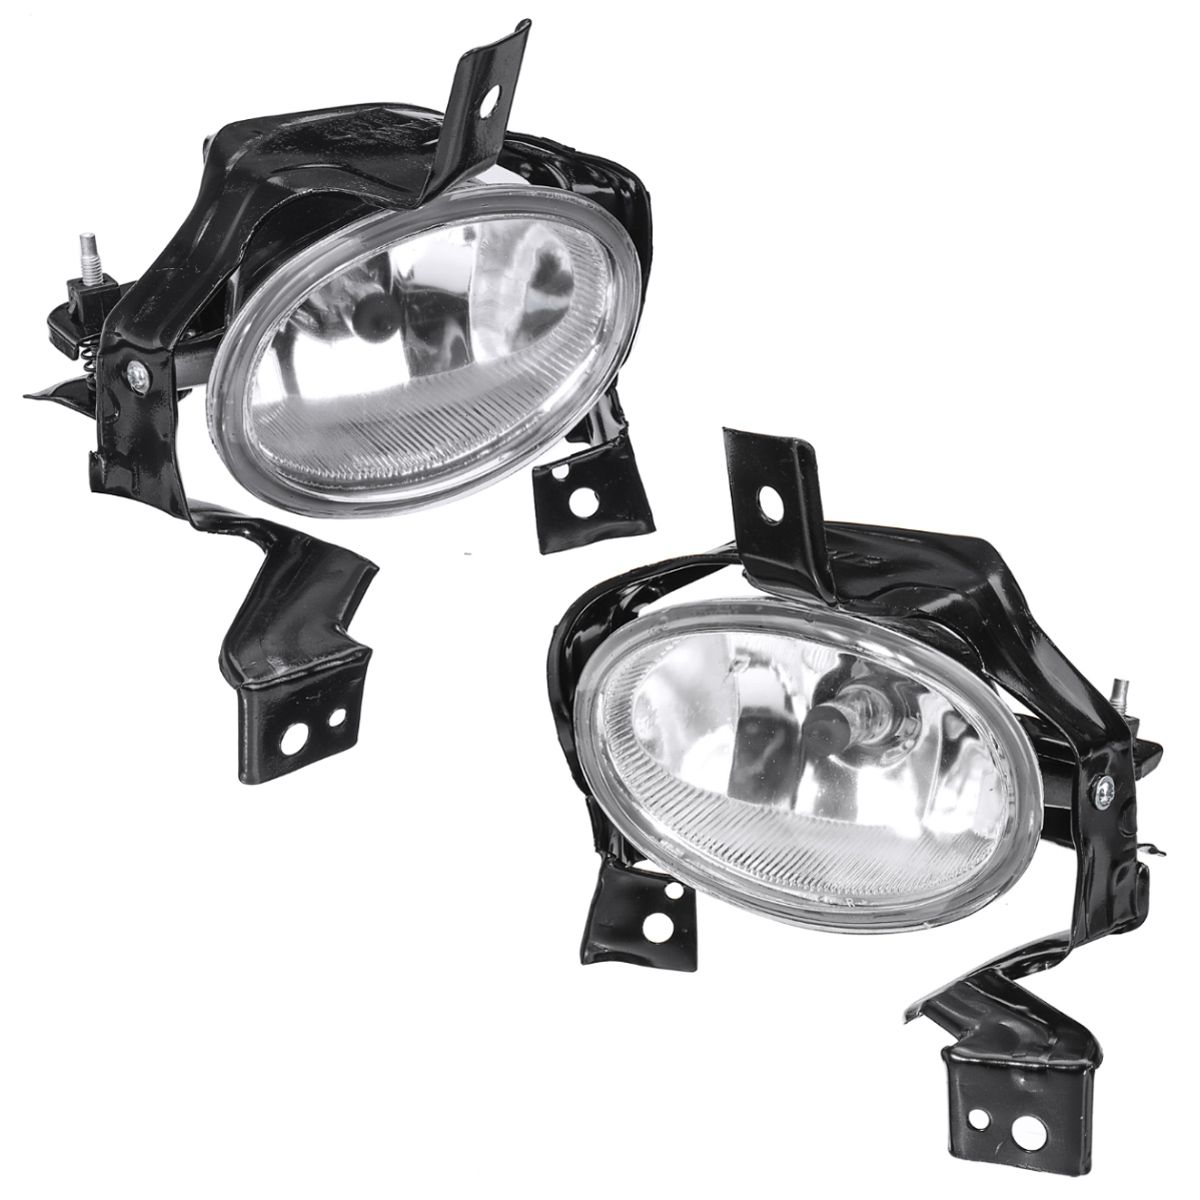 Car-Front-LeftRight-Halogen-Fog-Lights-Lamps-For-Honda-CR-V-CRV-2010-2011-1674476